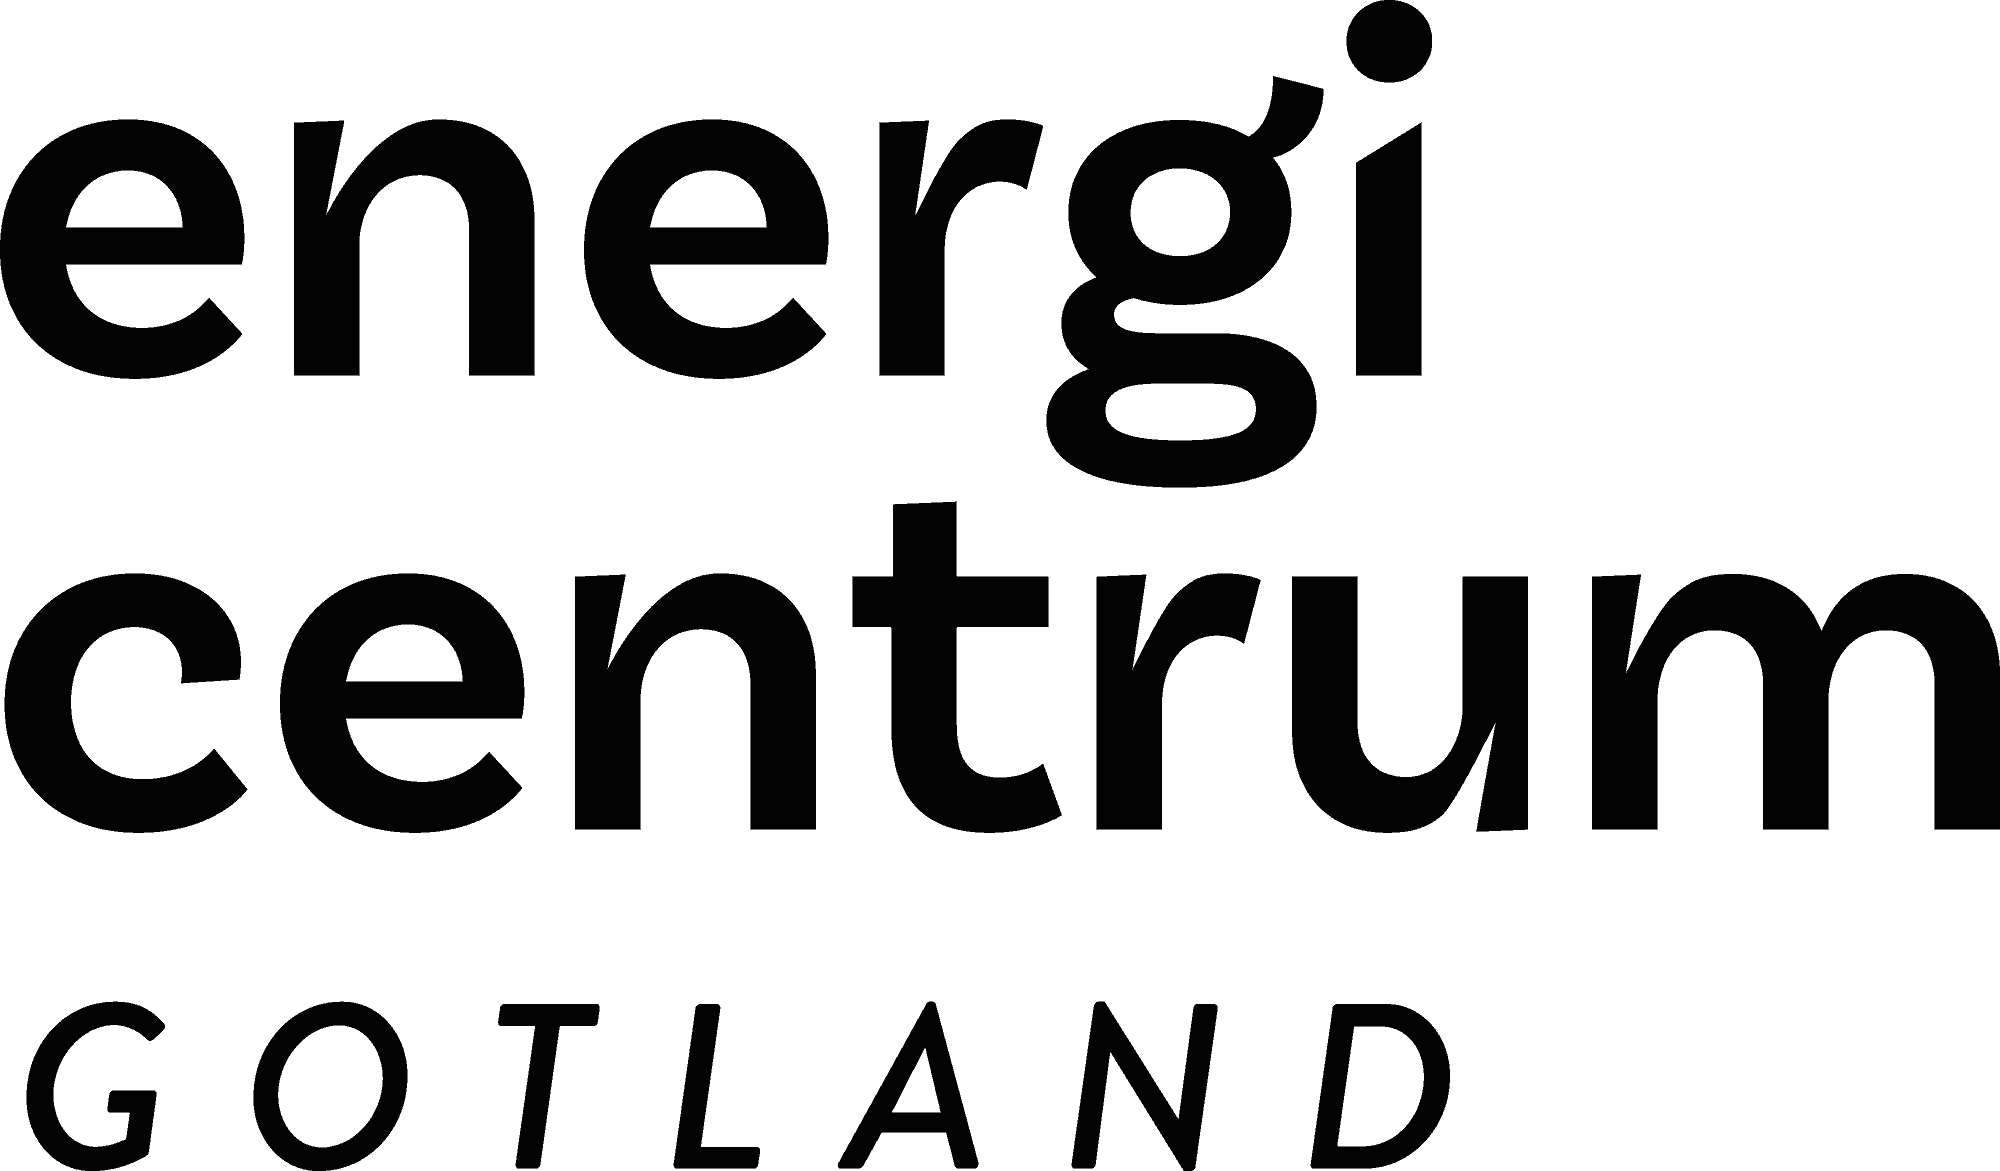 Energicentrum logotyp svart stående